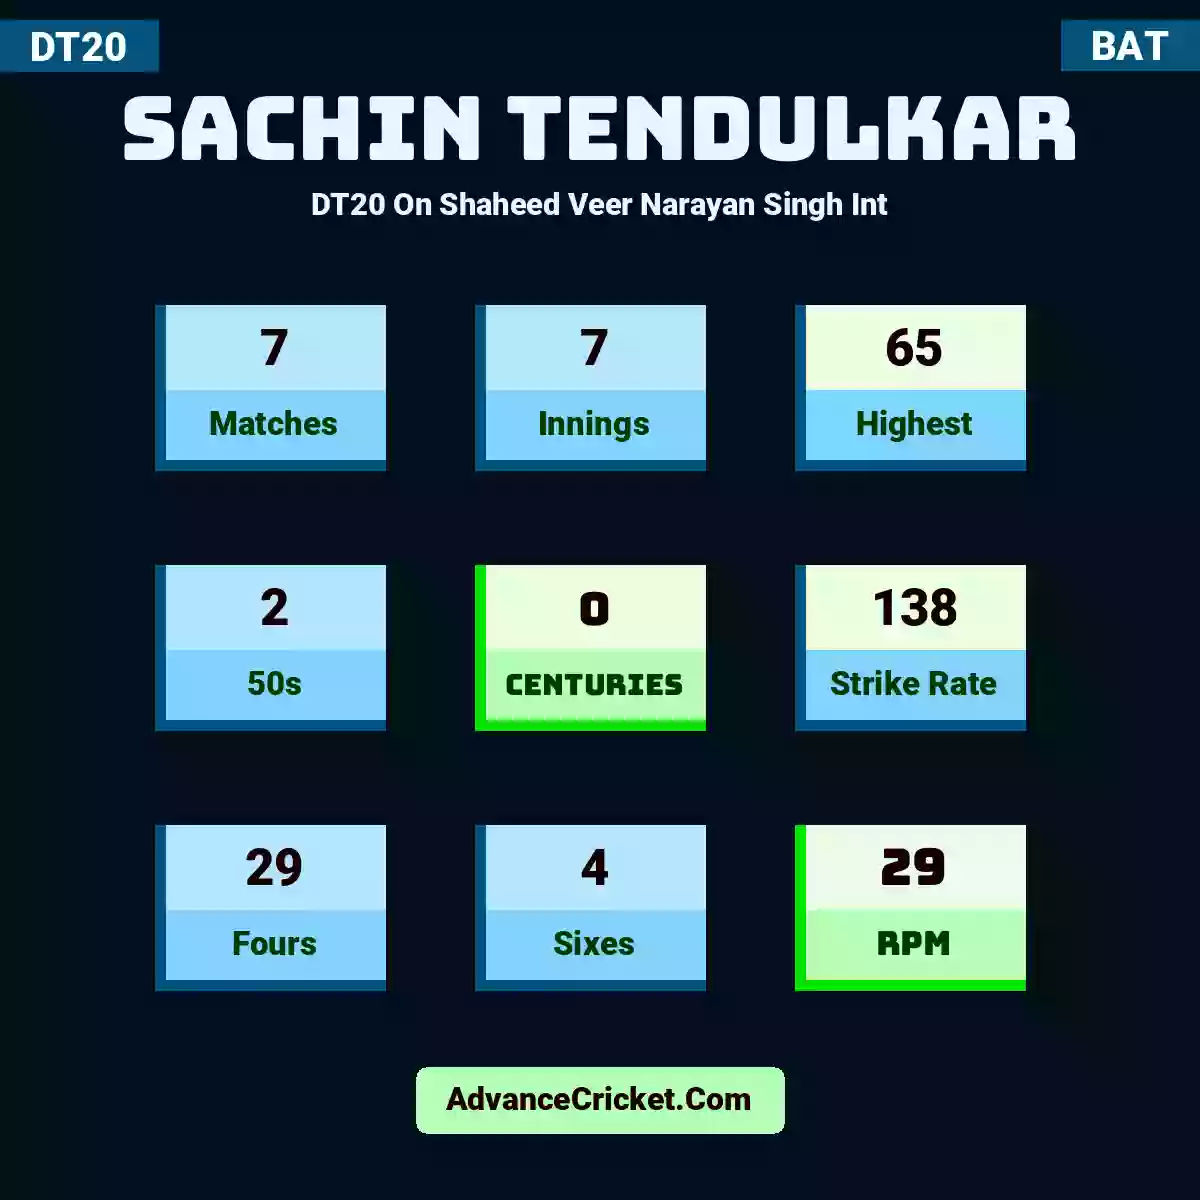 Sachin Tendulkar DT20  On Shaheed Veer Narayan Singh Int, Sachin Tendulkar played 7 matches, scored 65 runs as highest, 2 half-centuries, and 0 centuries, with a strike rate of 138. S.Tendulkar hit 29 fours and 4 sixes, with an RPM of 29.